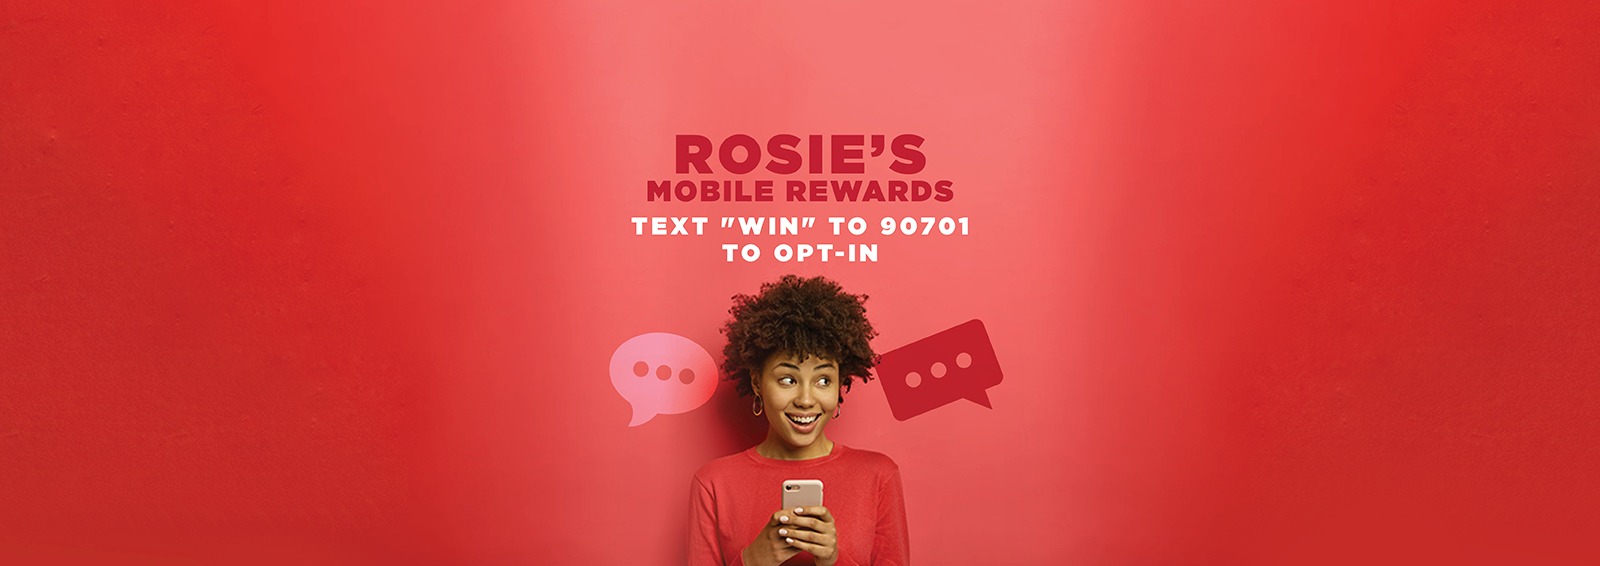 Rosies Mobile Rewards Text 